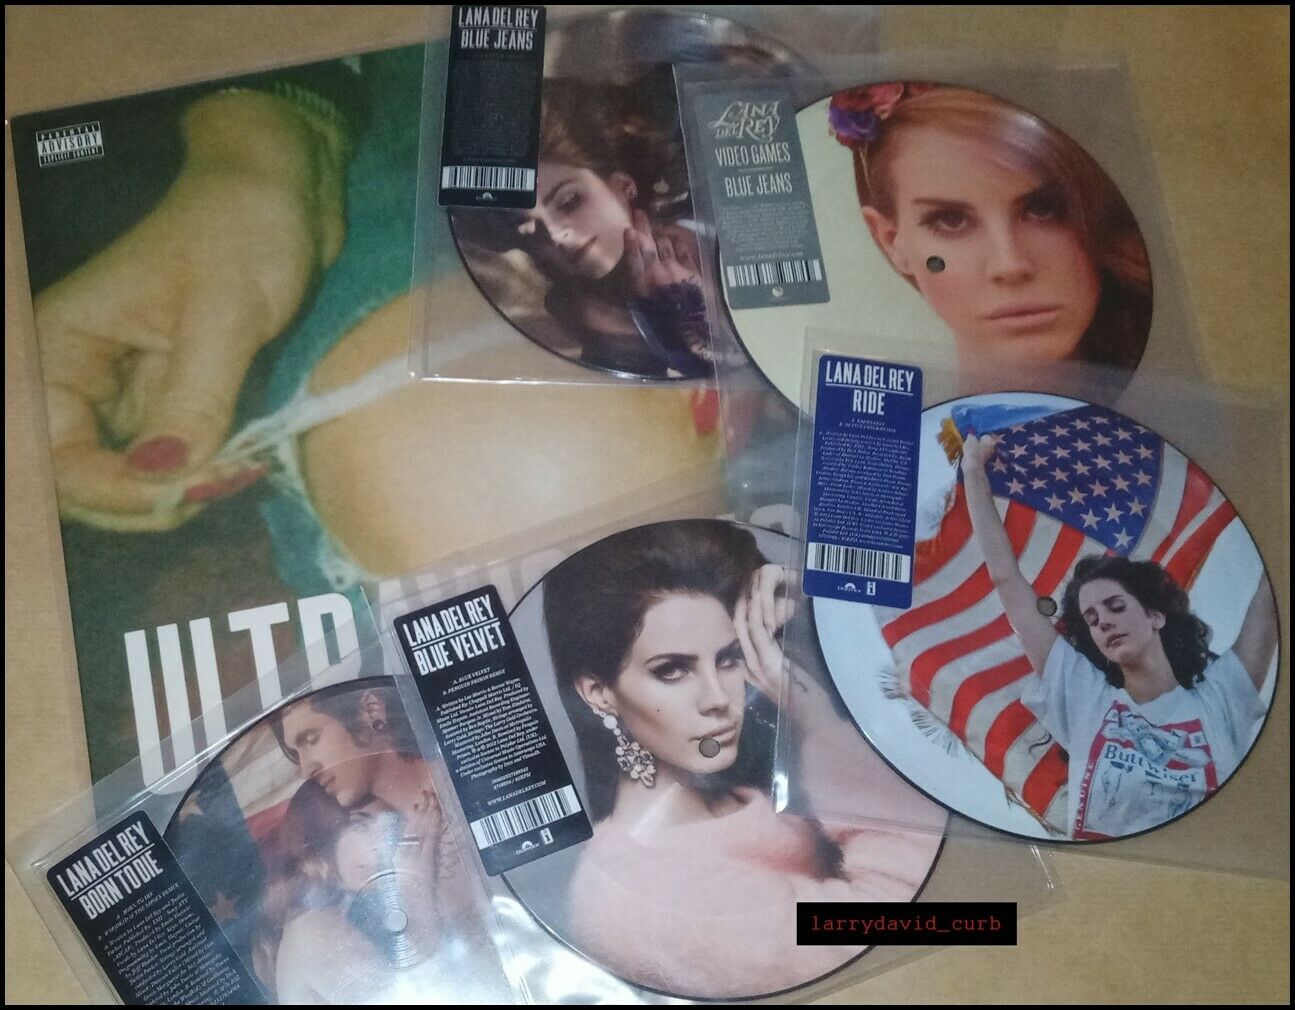 popsike.com - Lana Del Rey VINYL * Ride Video Games Blue Velvet *  Ultraviolence Urb Outfitters - auction details